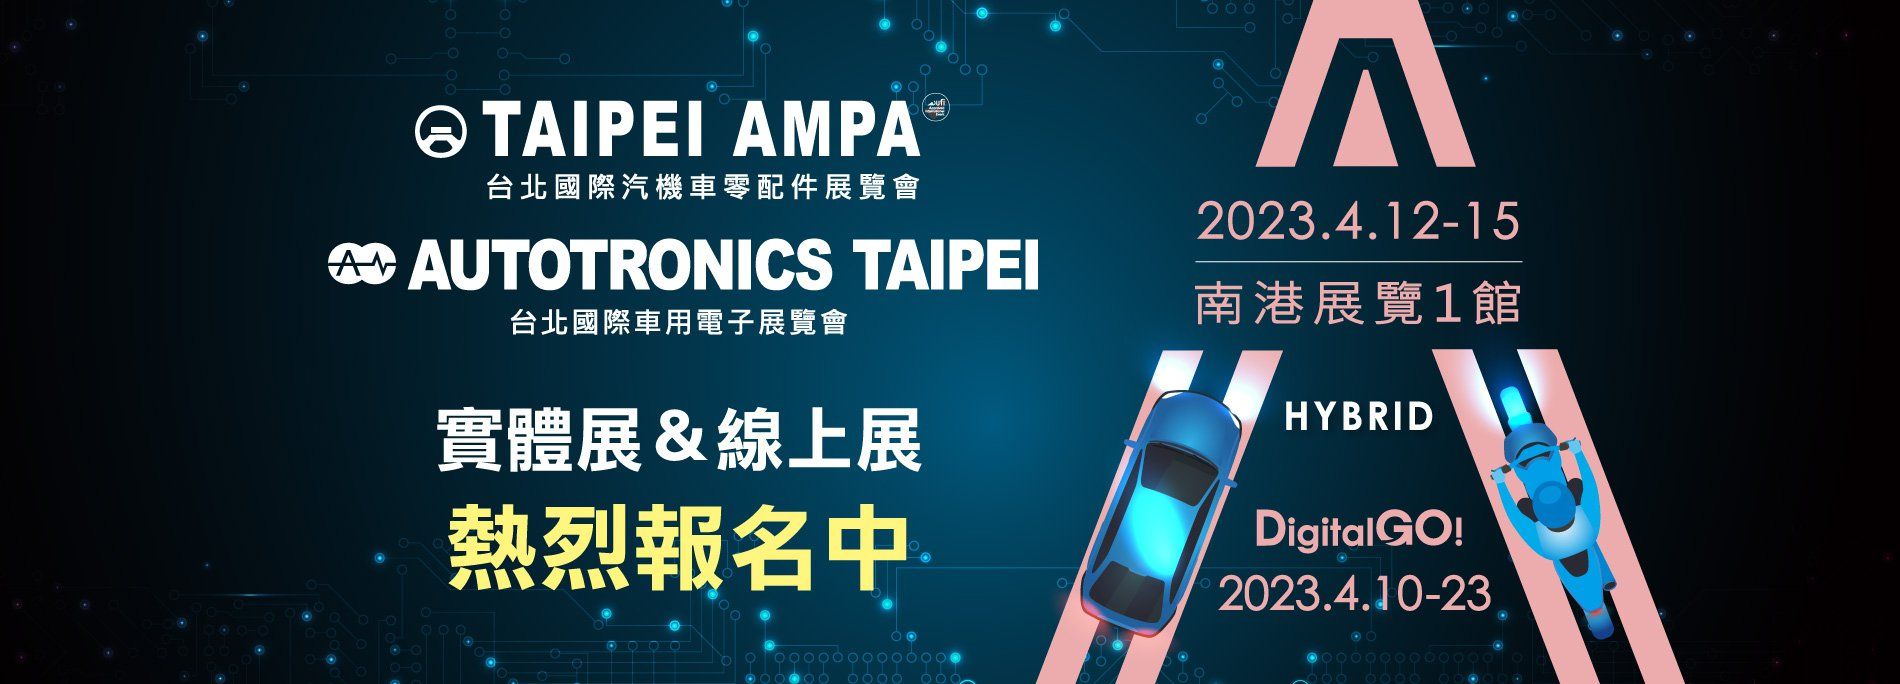 Đài Bắc AMPA 2023.